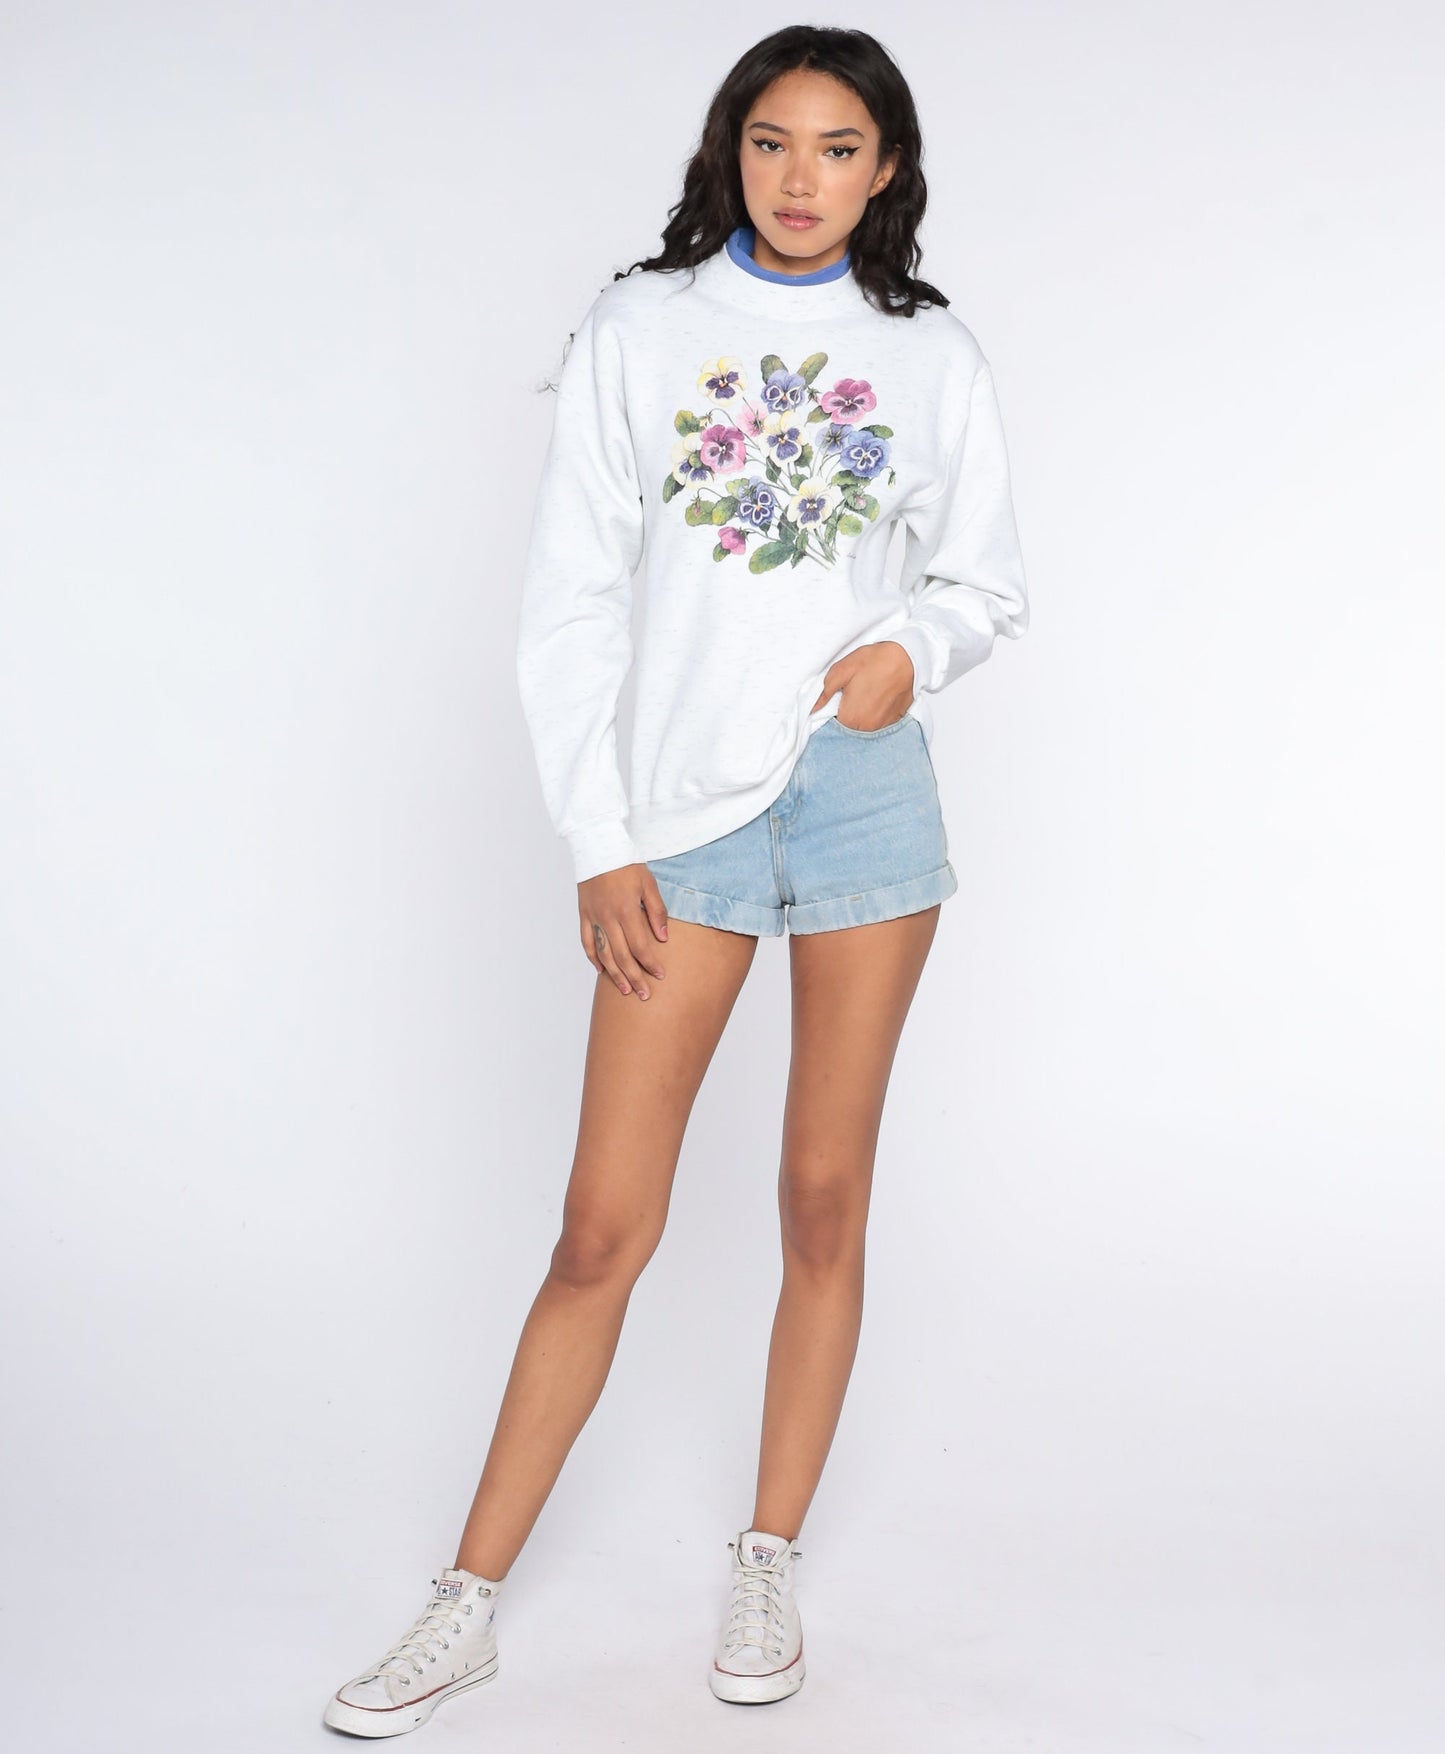 Pansy Sweatshirt 90s Floral Sweatshirt Grey Jumper Shirt 80s Graphic Sweater Pullover Vintage Kawaii Retro Small Medium